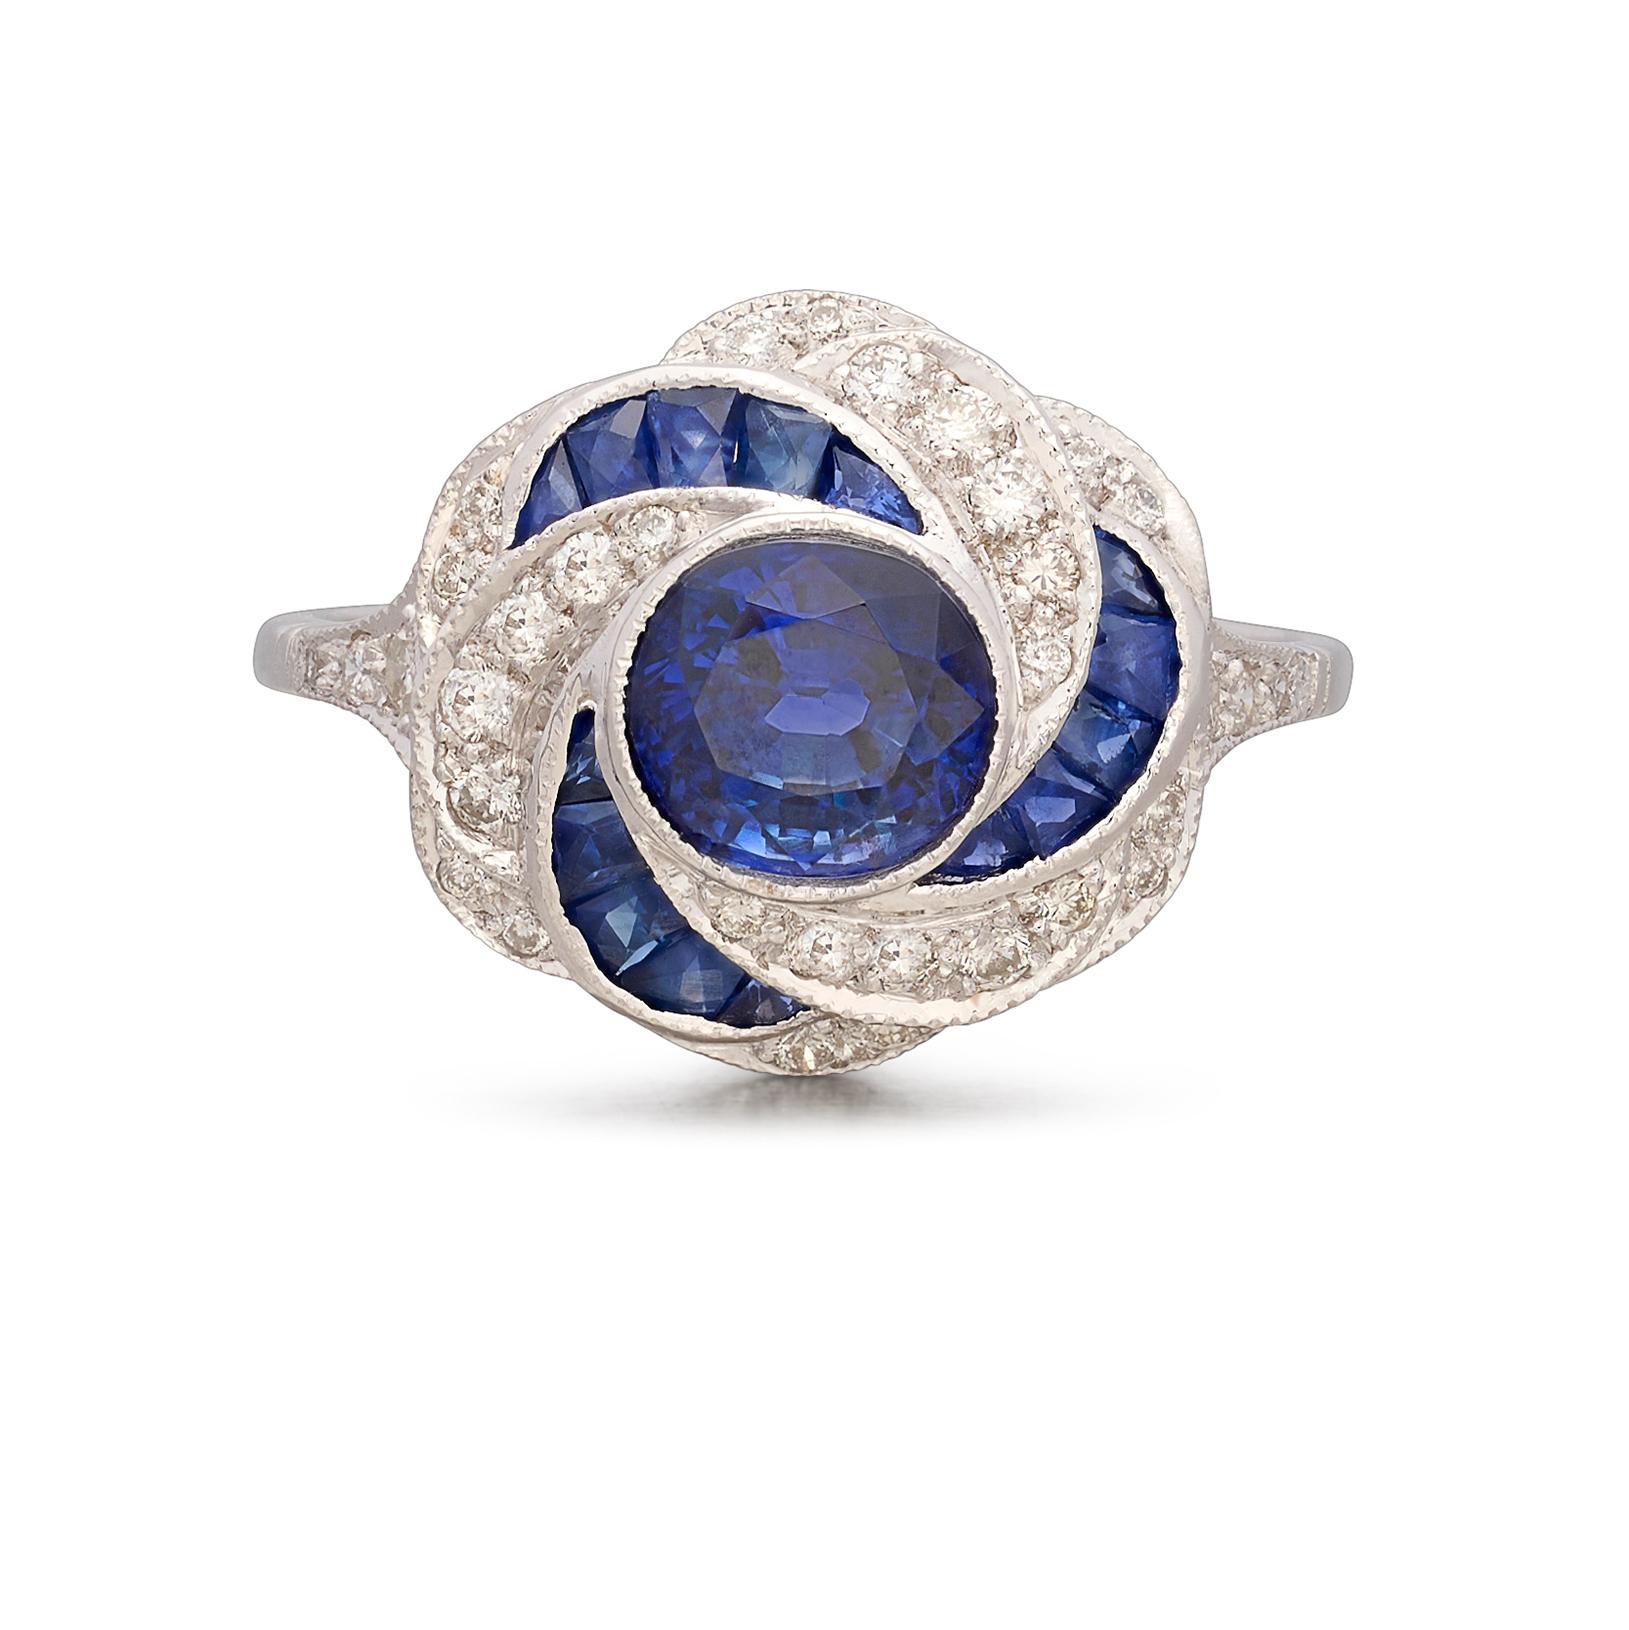 Unique Art Deco Inspired Sapphire & Diamond 18k Ring For Sale 1